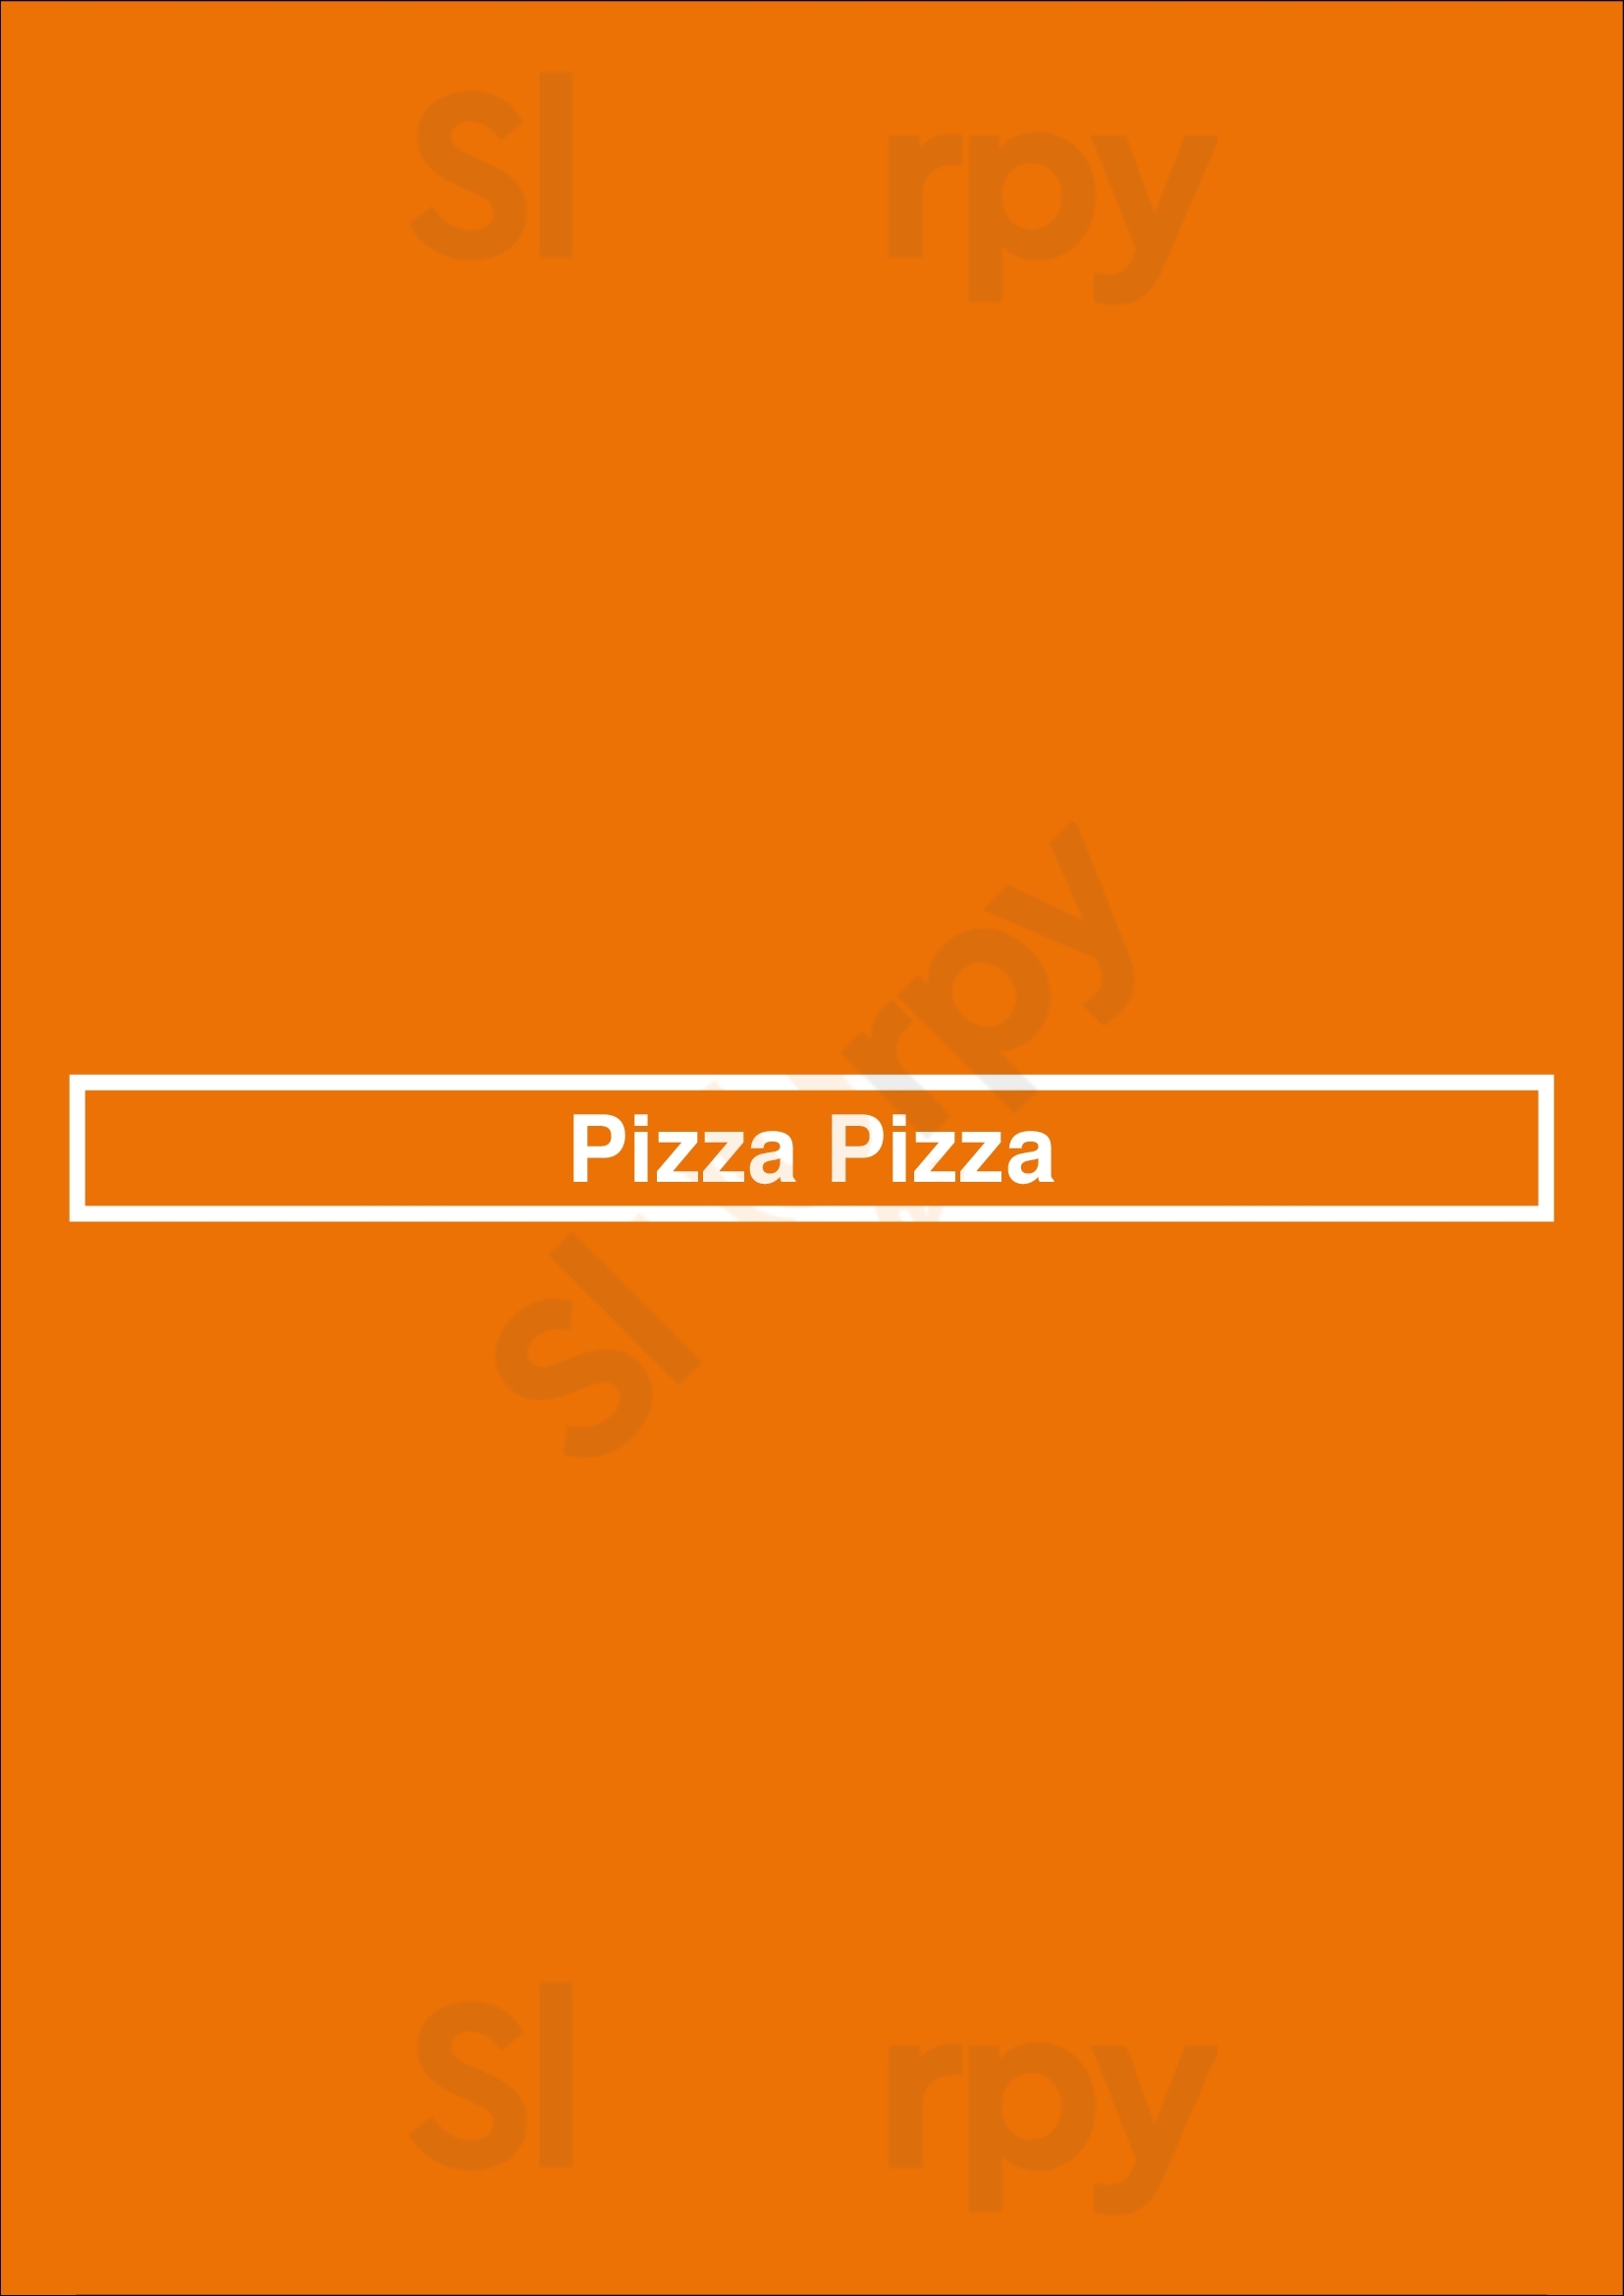 Pizza Pizza Bowmanville Menu - 1